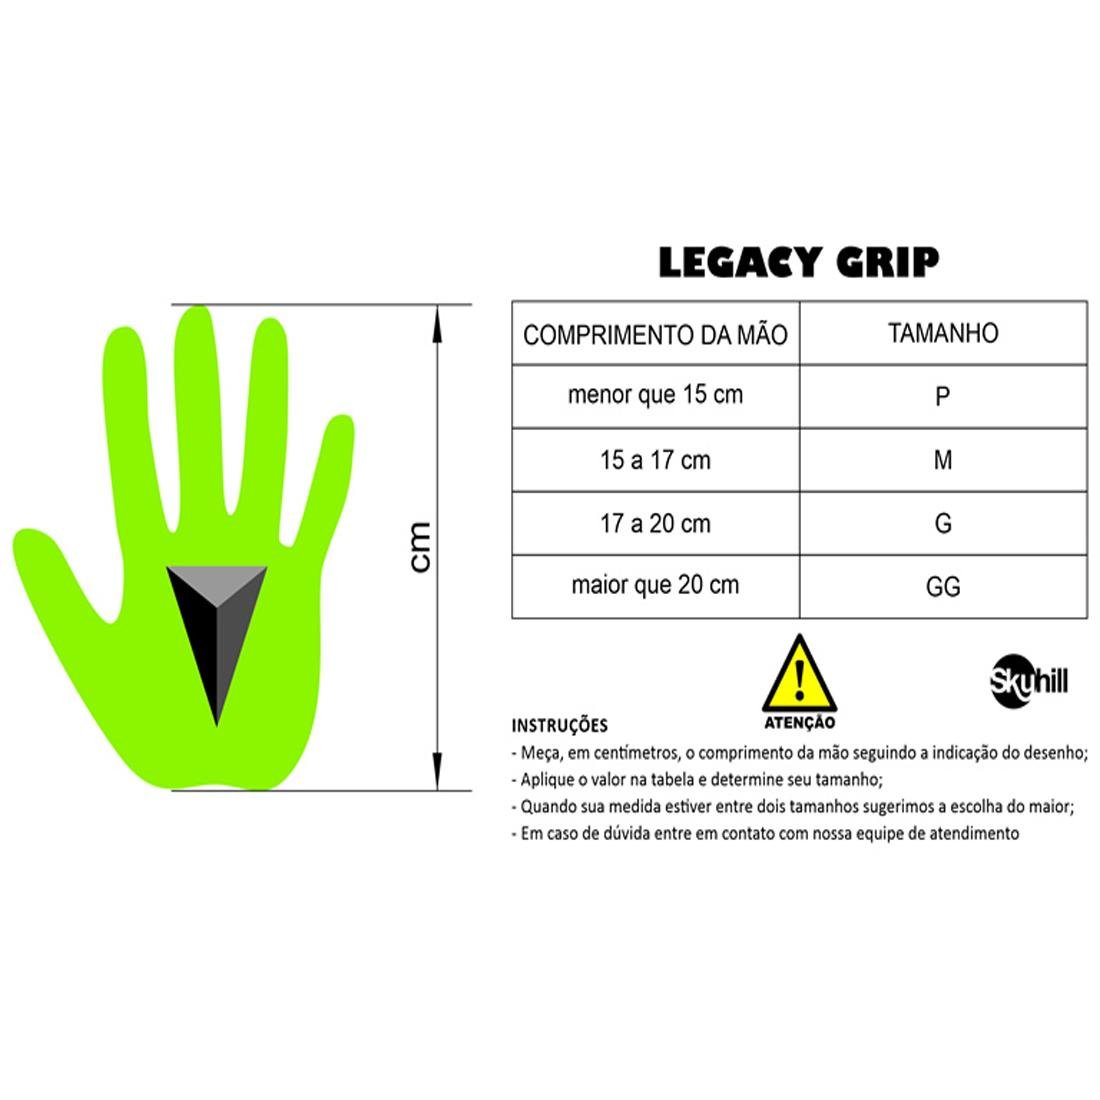 Hand Grip Legacy Power Colors Neopreme Skyhill - Laranja - G - 1